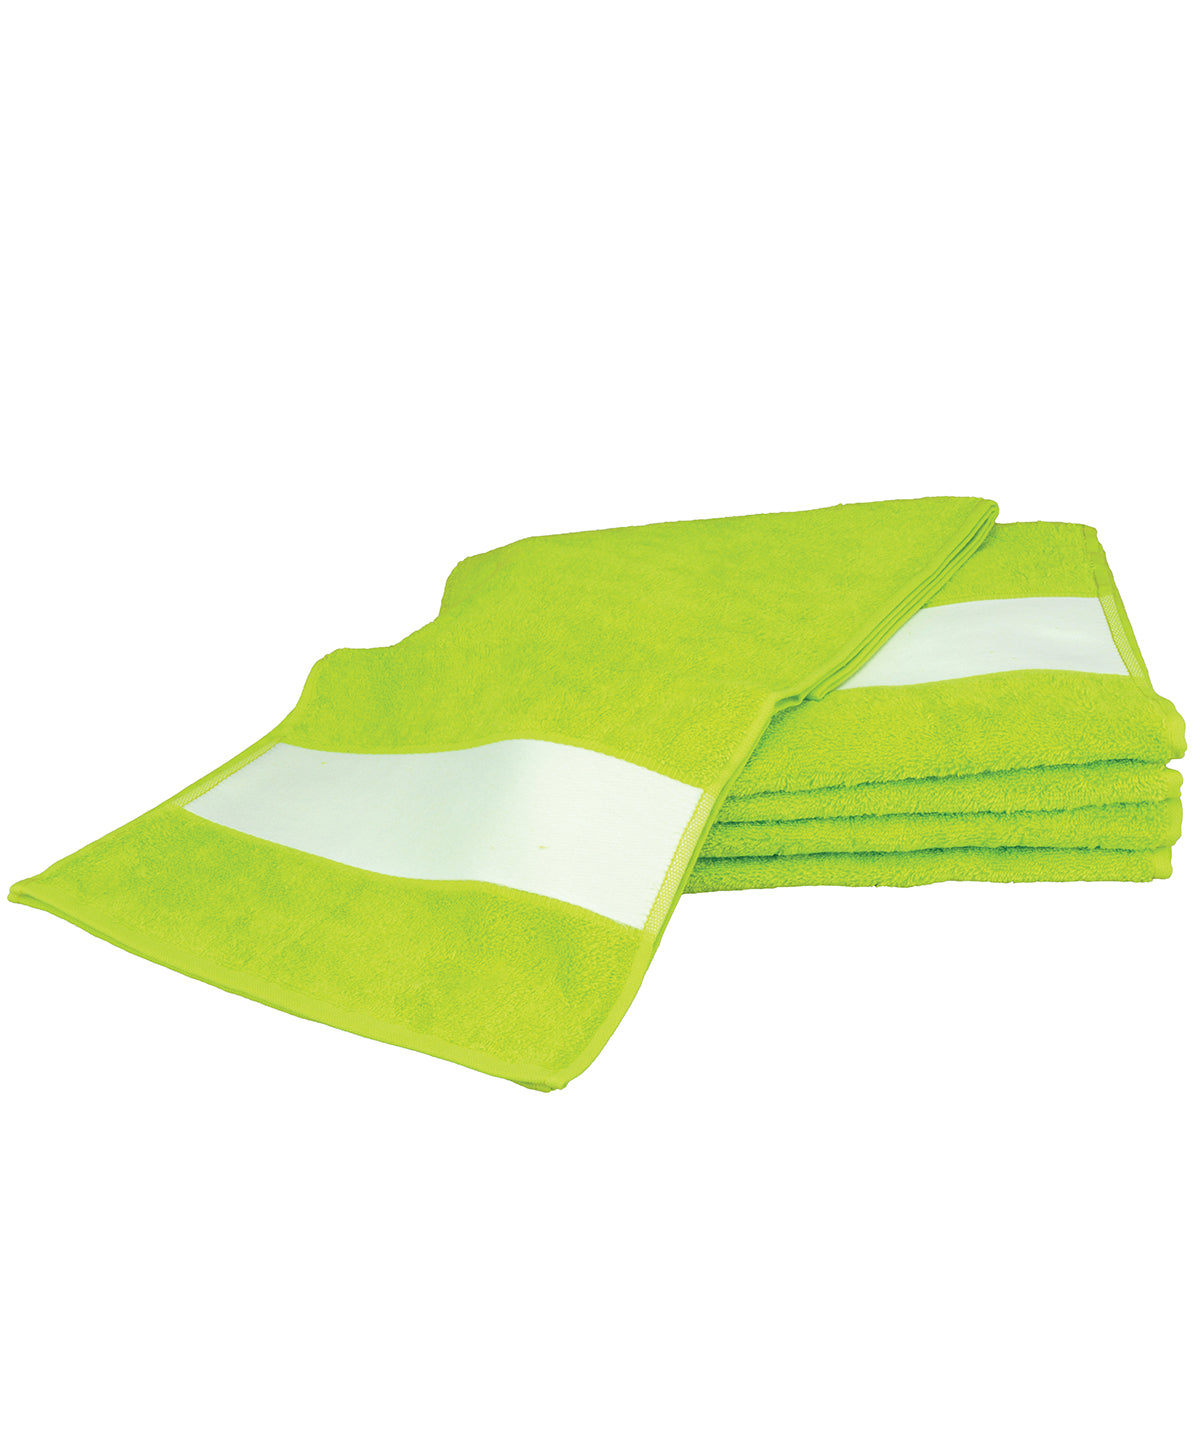 Personalised Towels - Lime A&R Towels ARTG® SUBLI-Me® sport towel